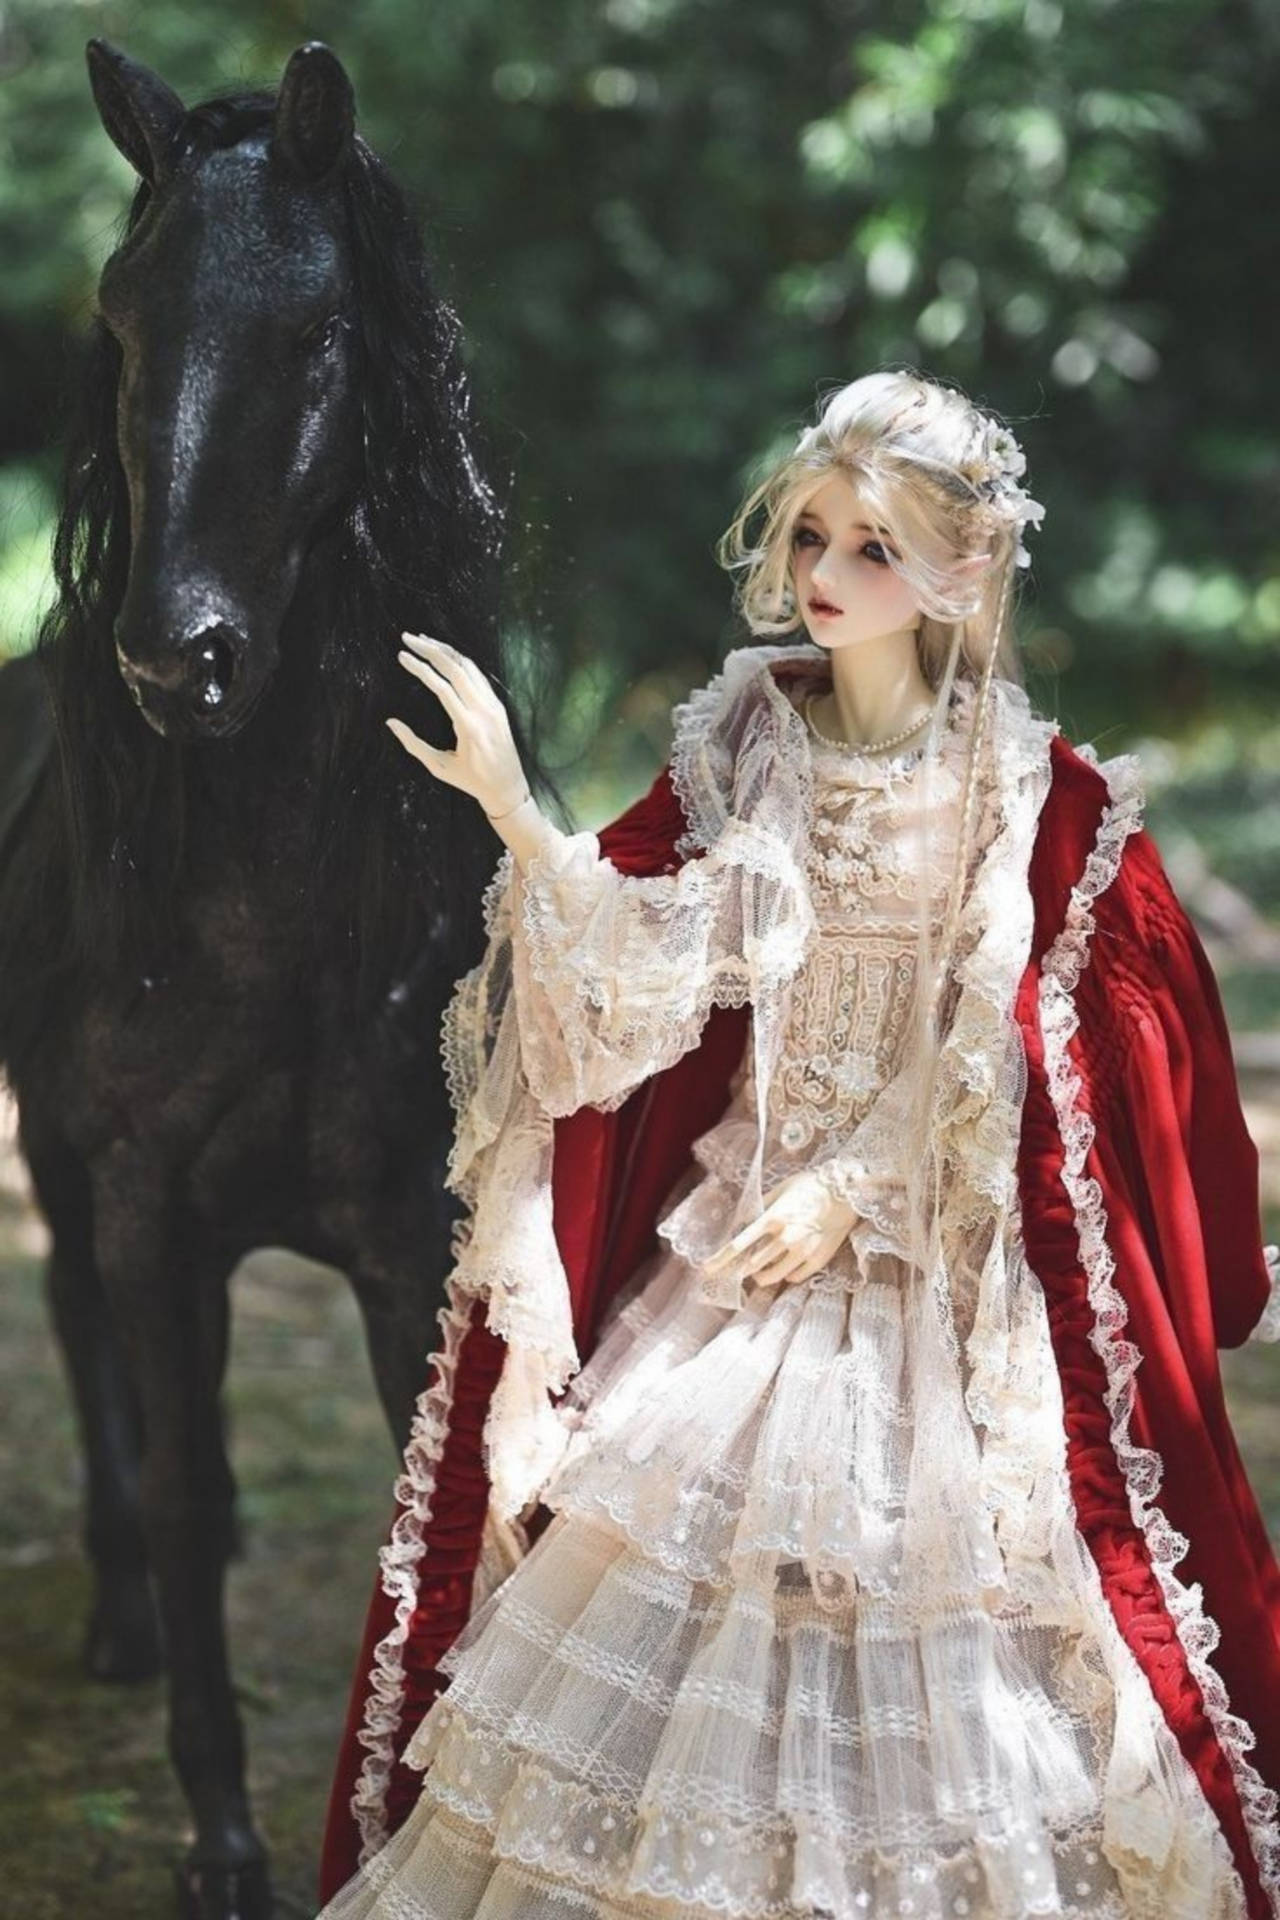 Barbie Doll Elf Queen Beside Black Horse Background